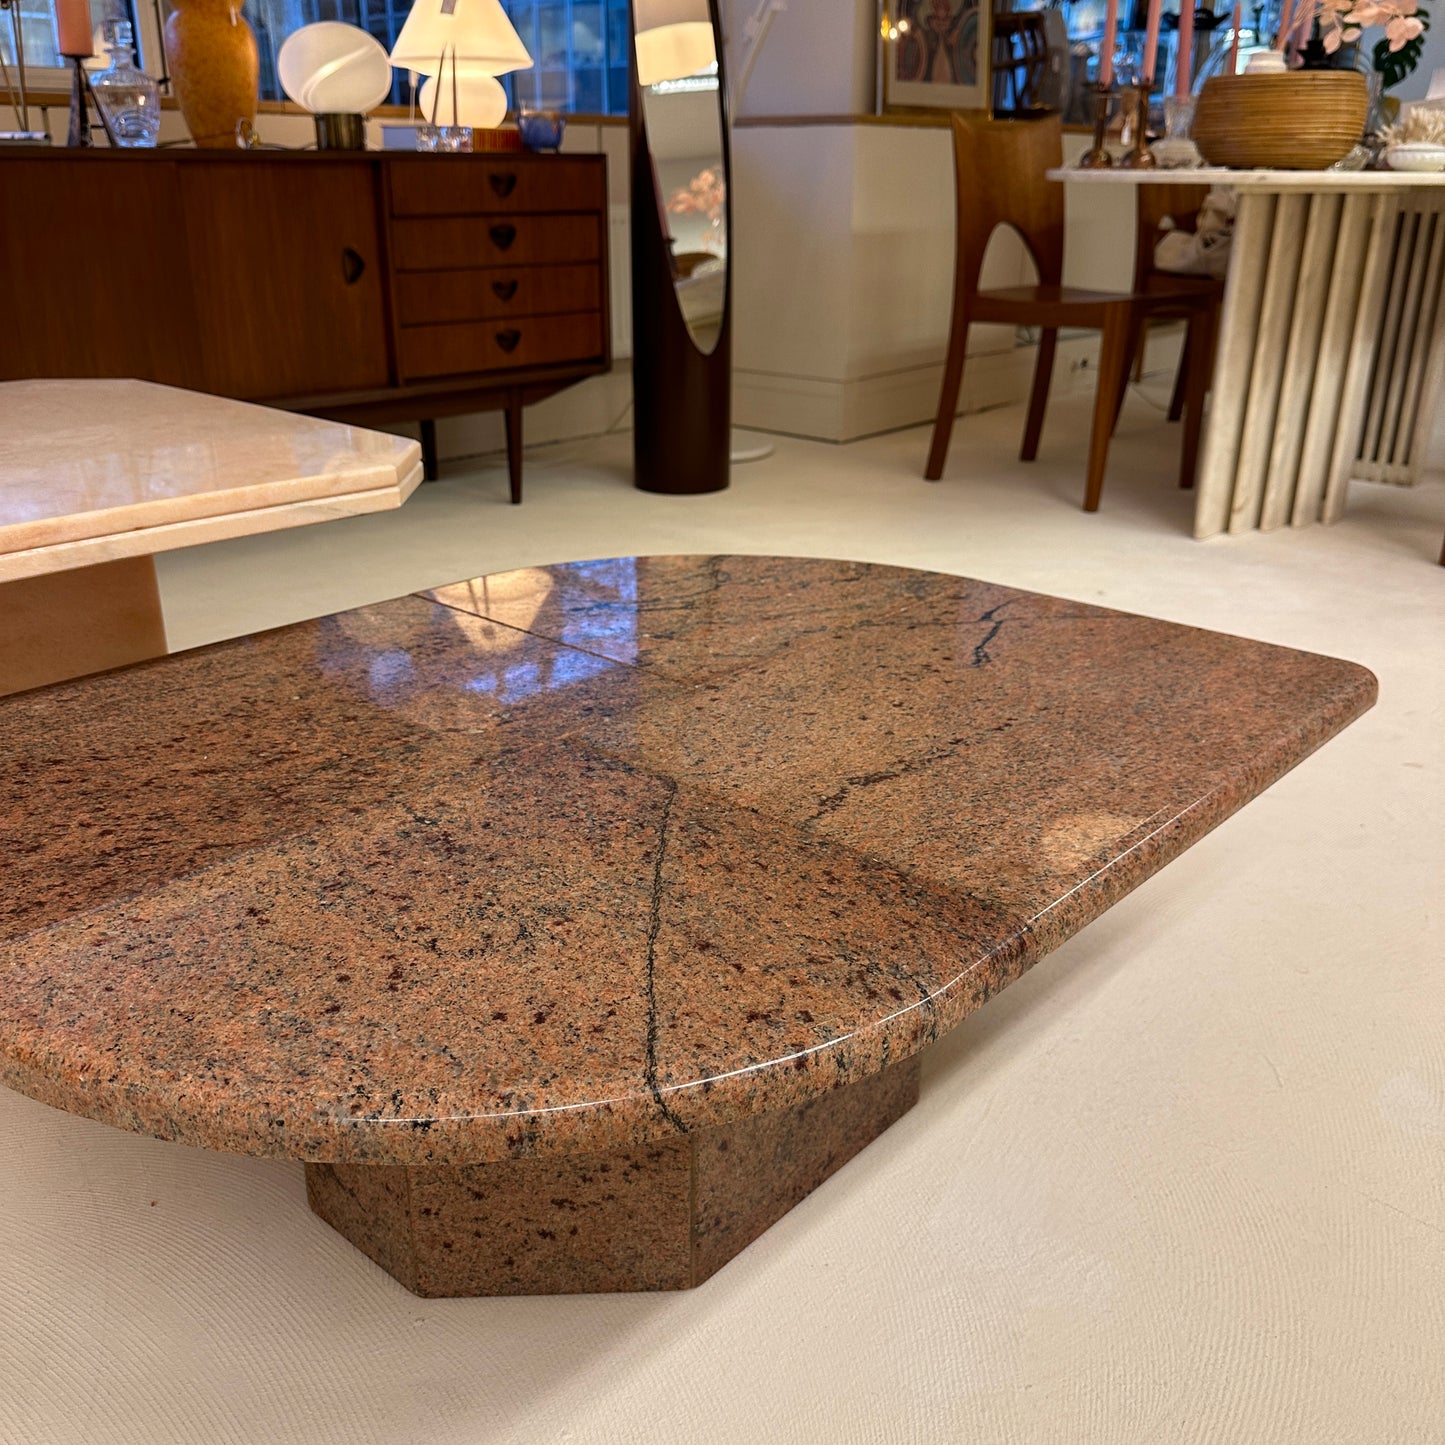 Eye-shaped granite coffee table